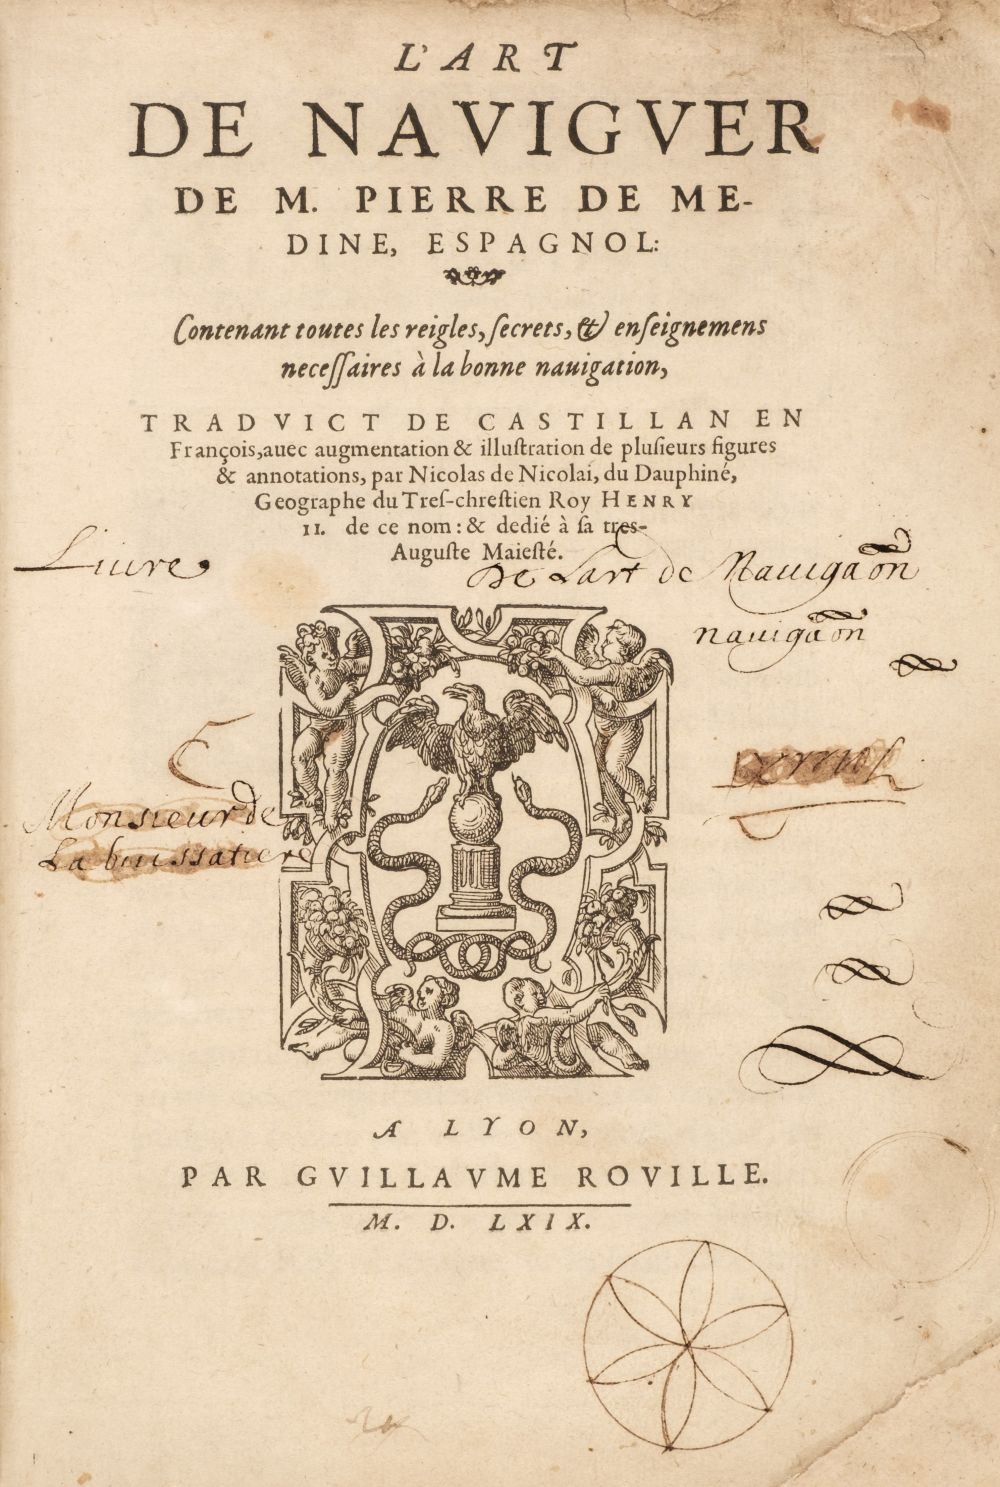 Medina (Pedro de). L'art de naviguer, 2nd French edition, Lyon, 1569 - Image 2 of 2